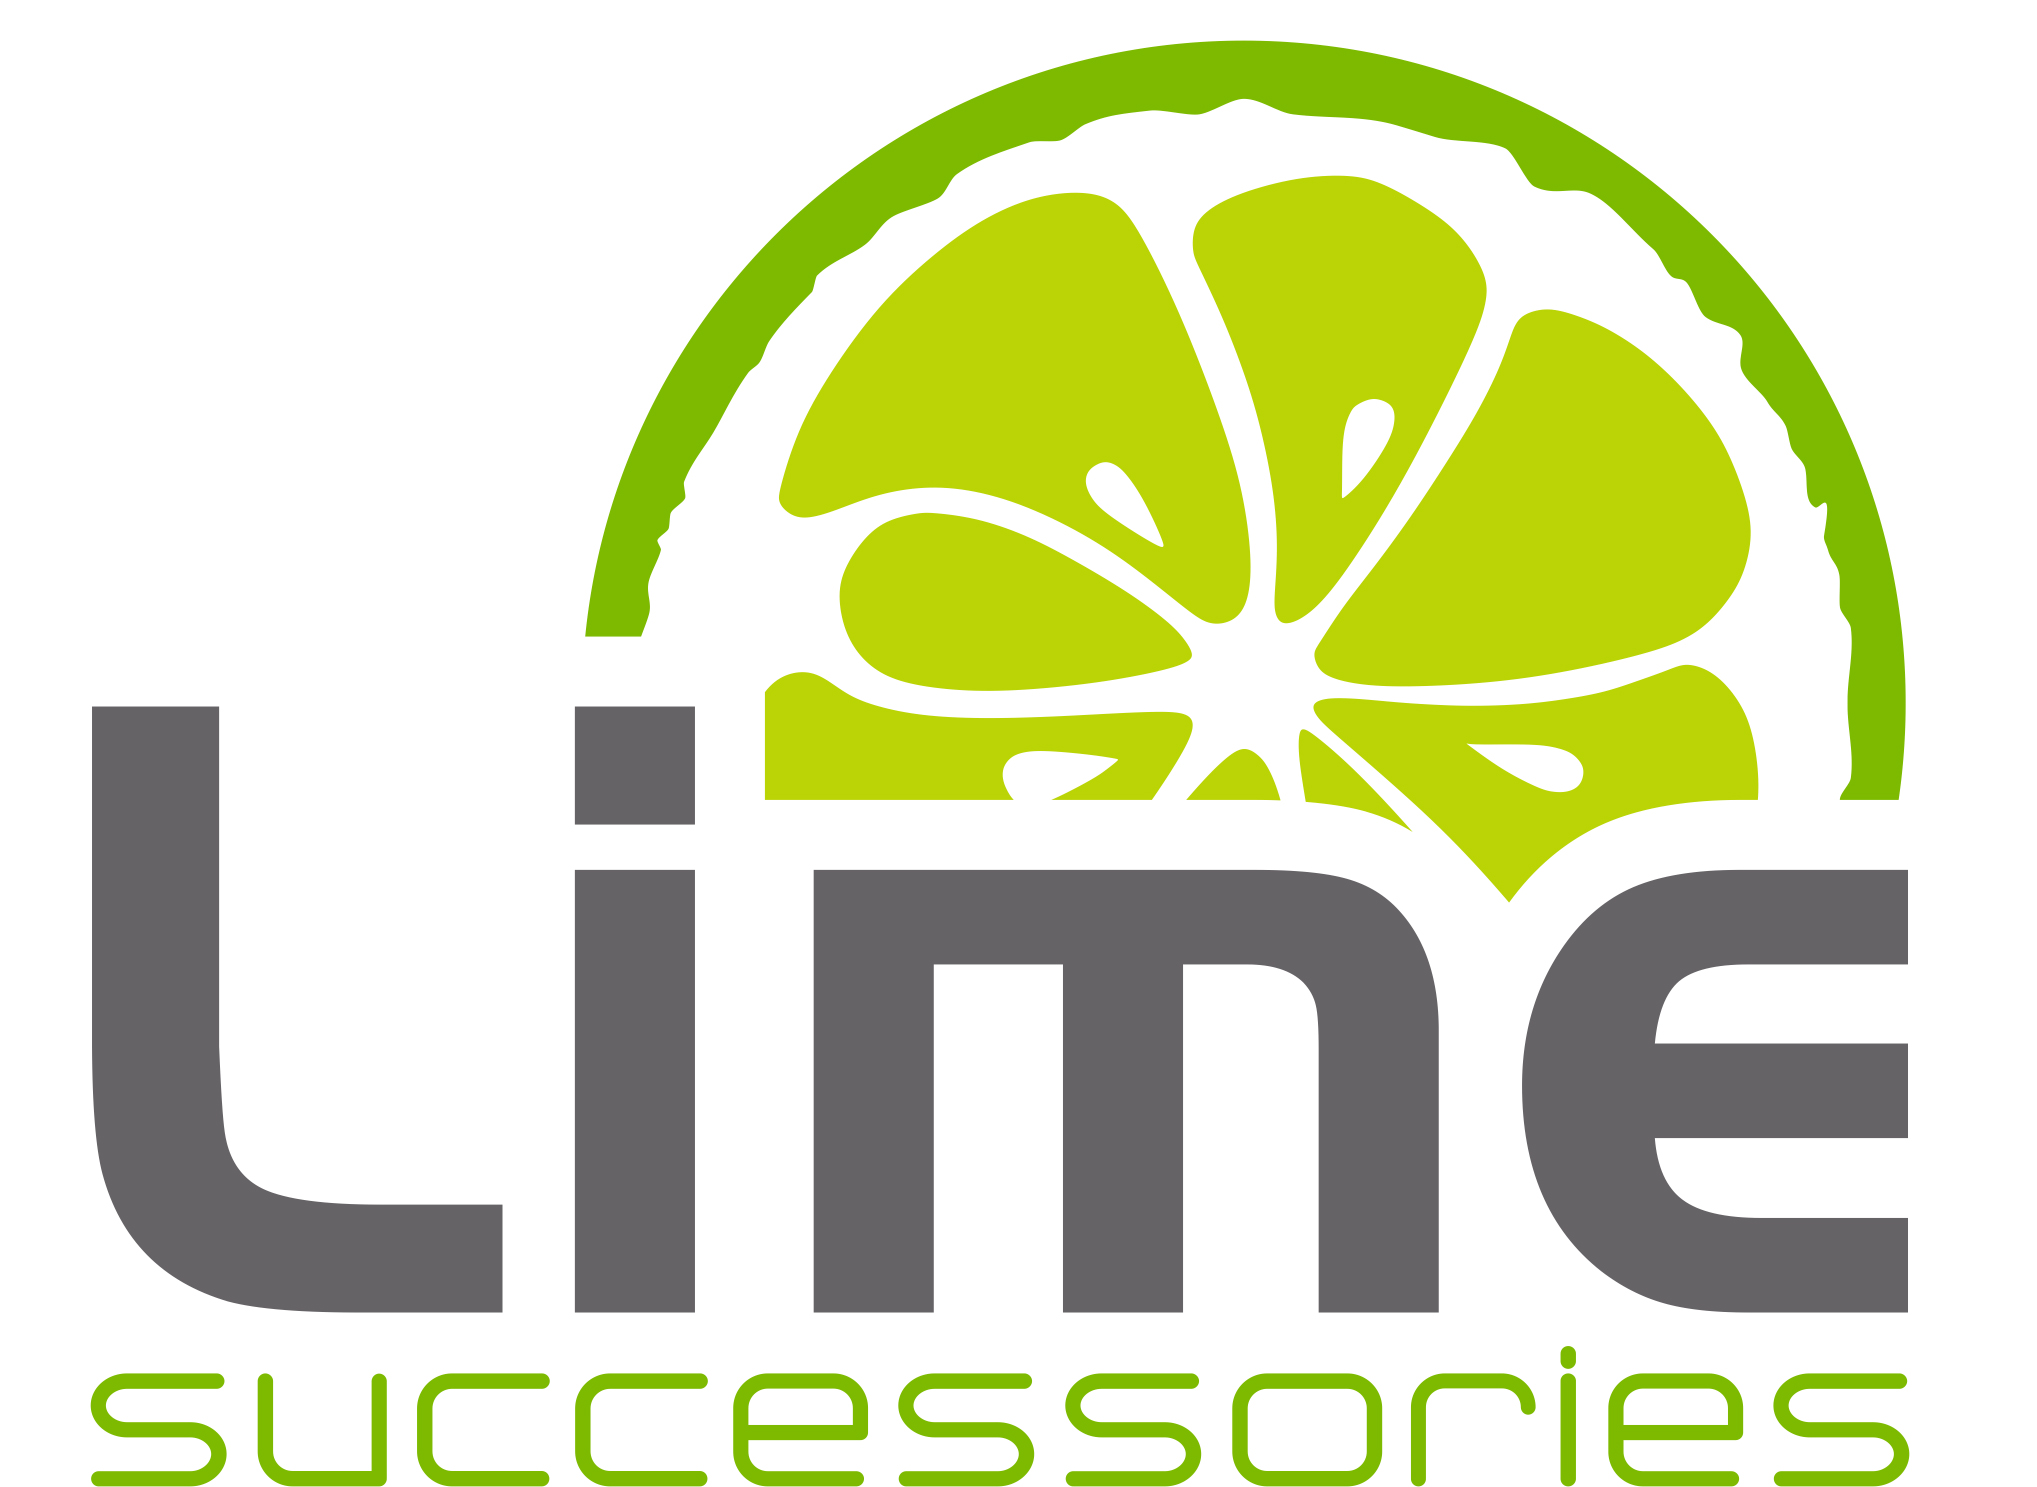 Lime Интернет Магазин Спб